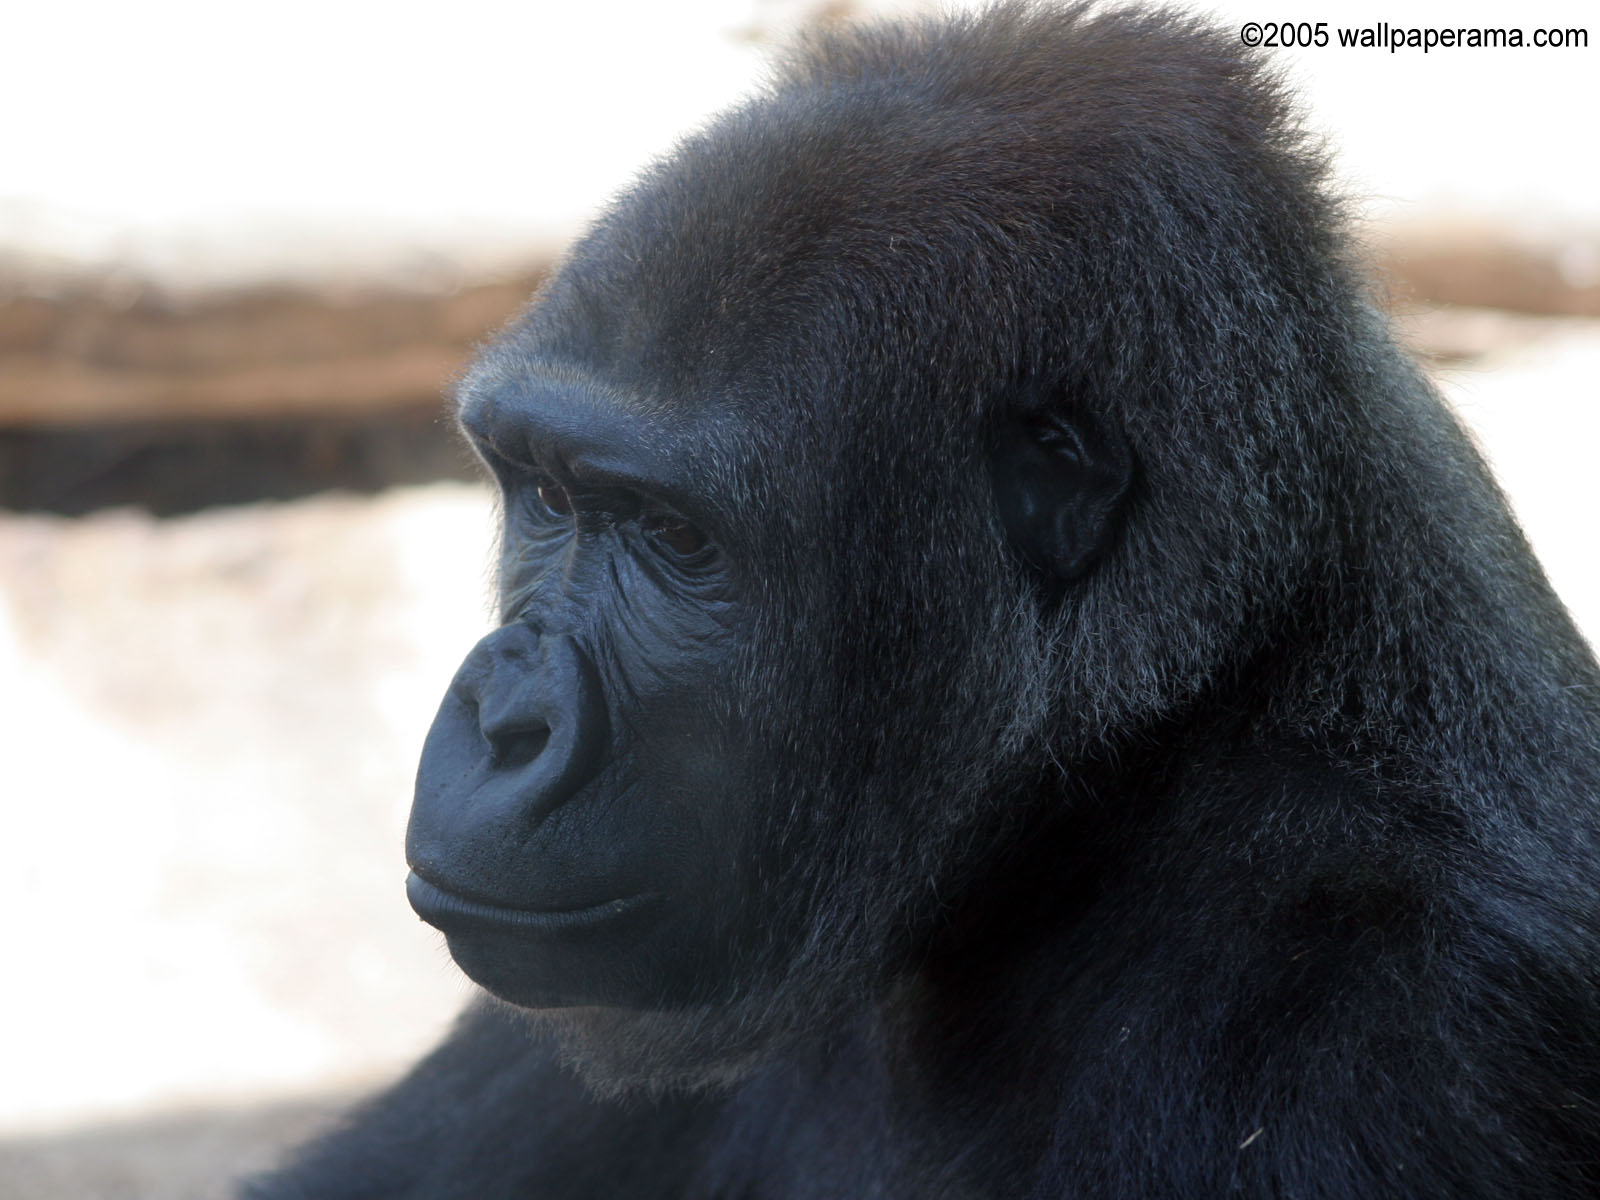 Black Gorilla Wallpaper HD Background Image Pictures